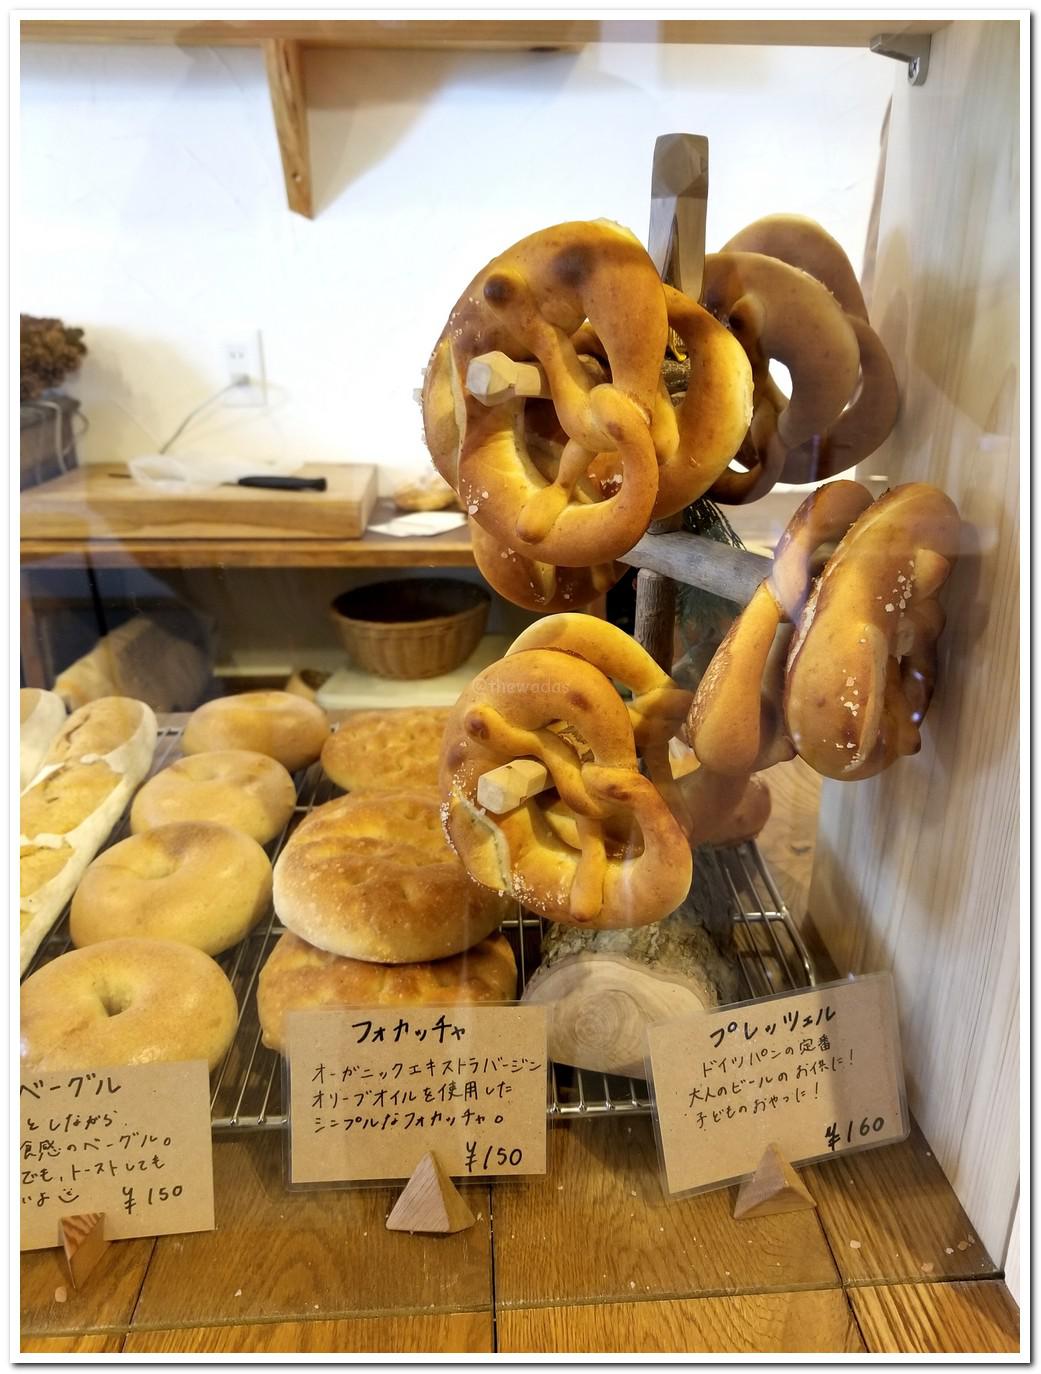 Bakery Obst in Ushimado, Setouchi City